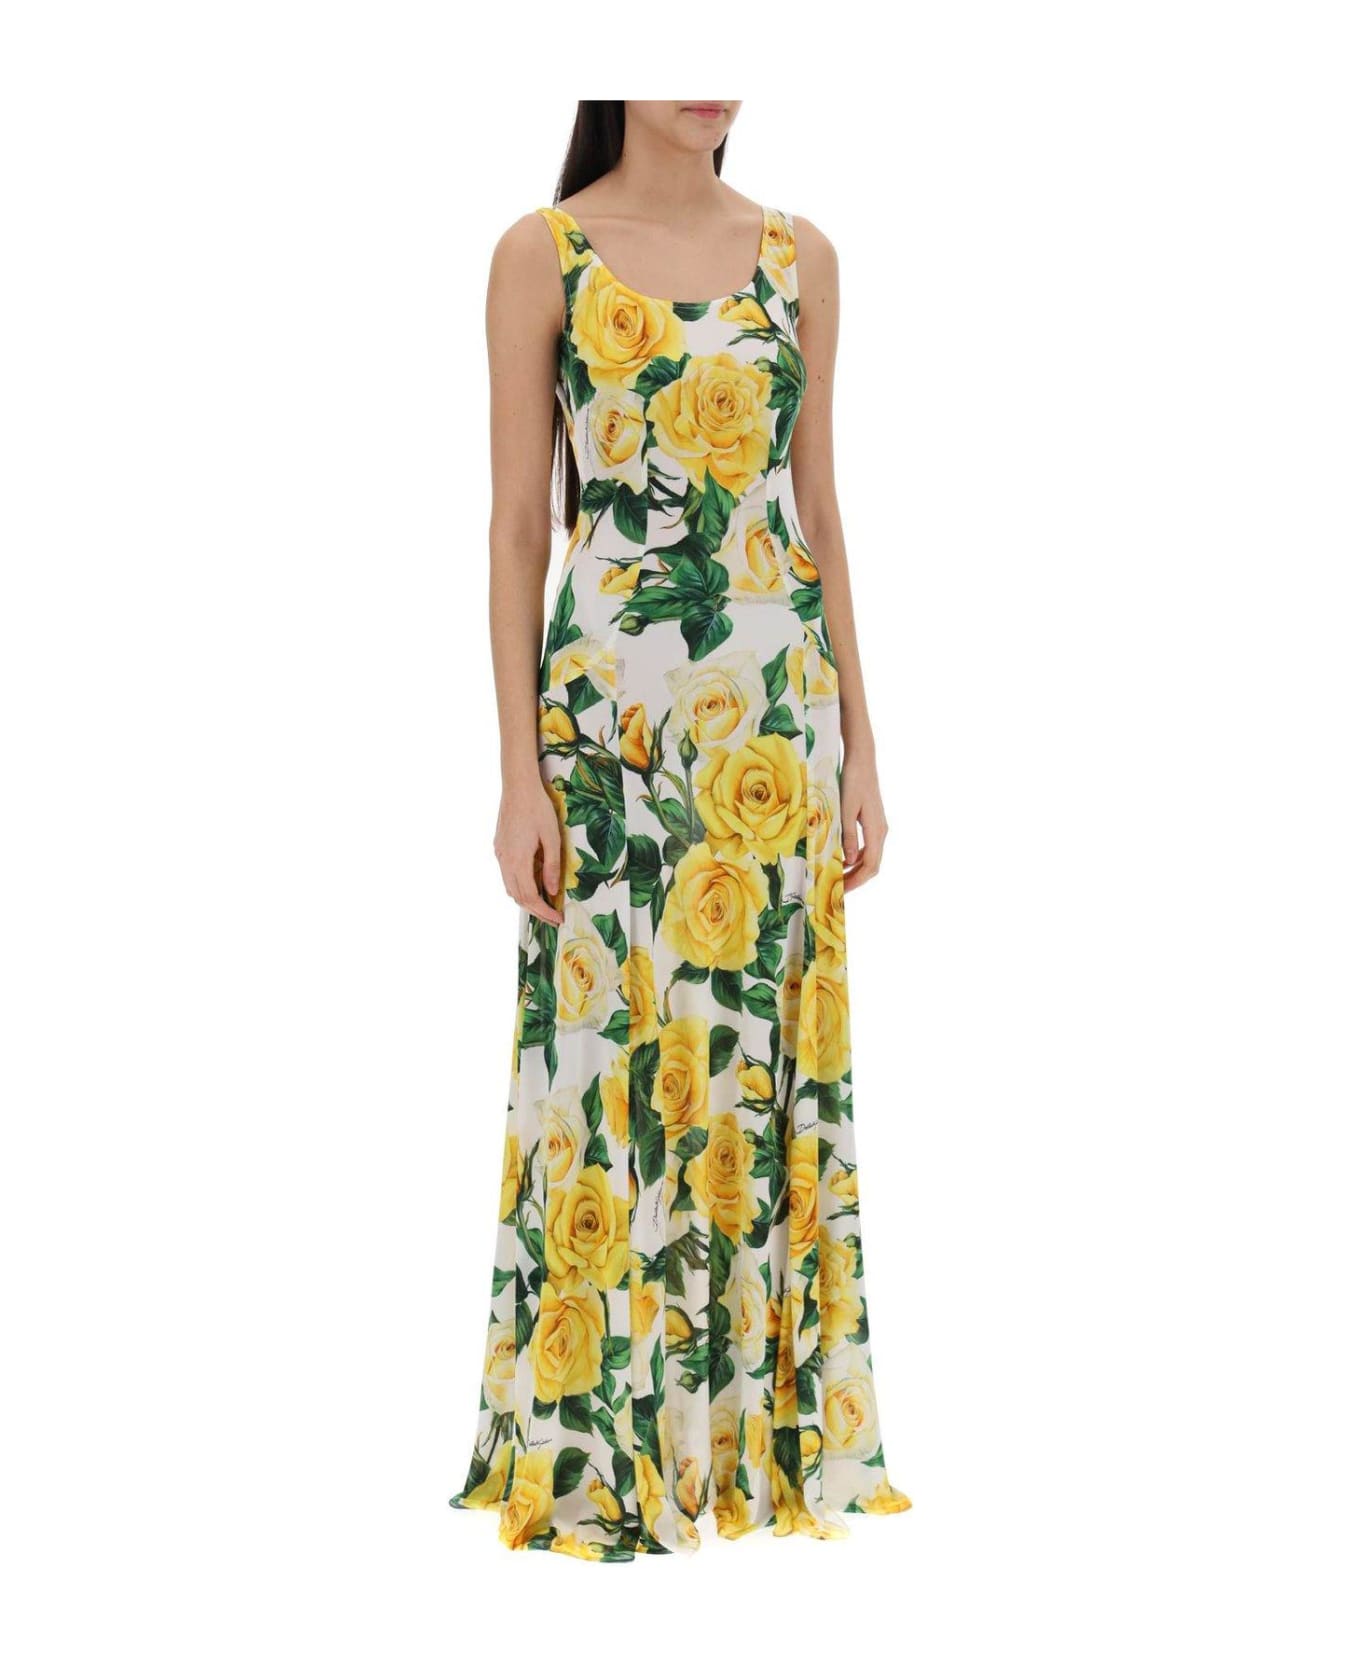 Dolce & Gabbana Sleeveless Midi Dress - Yellow, green, white